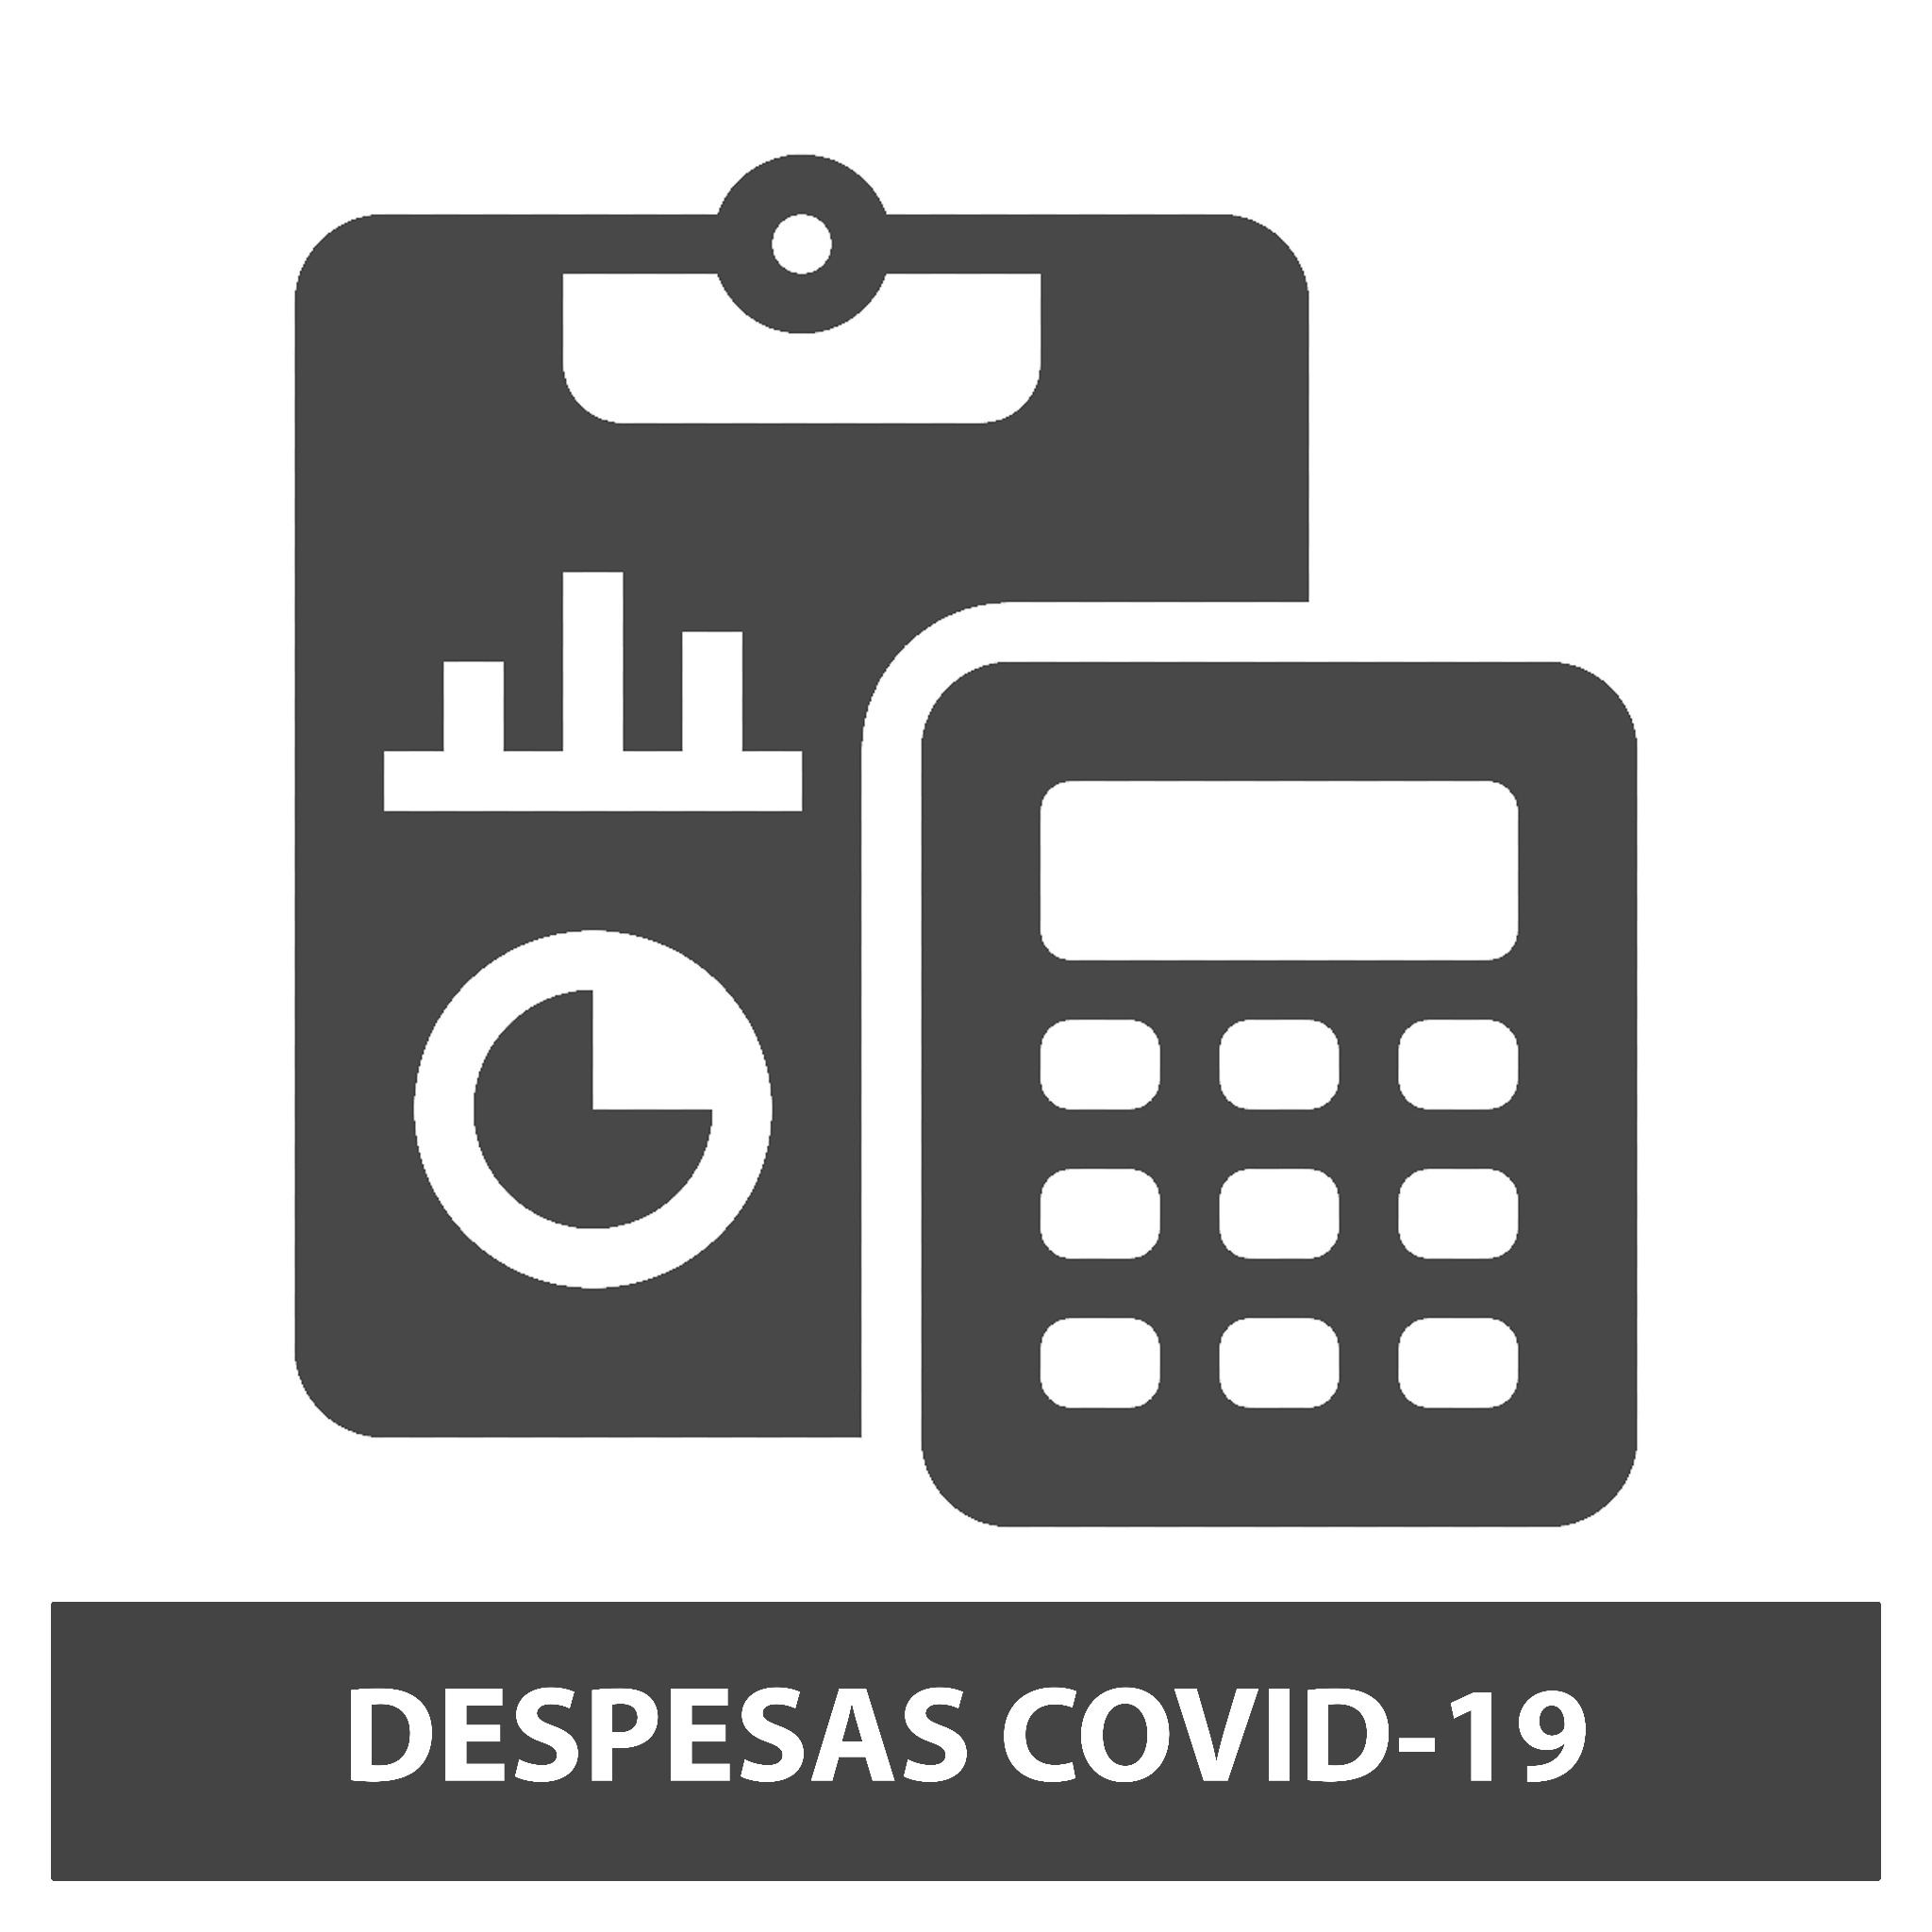 Despesas COVID-19